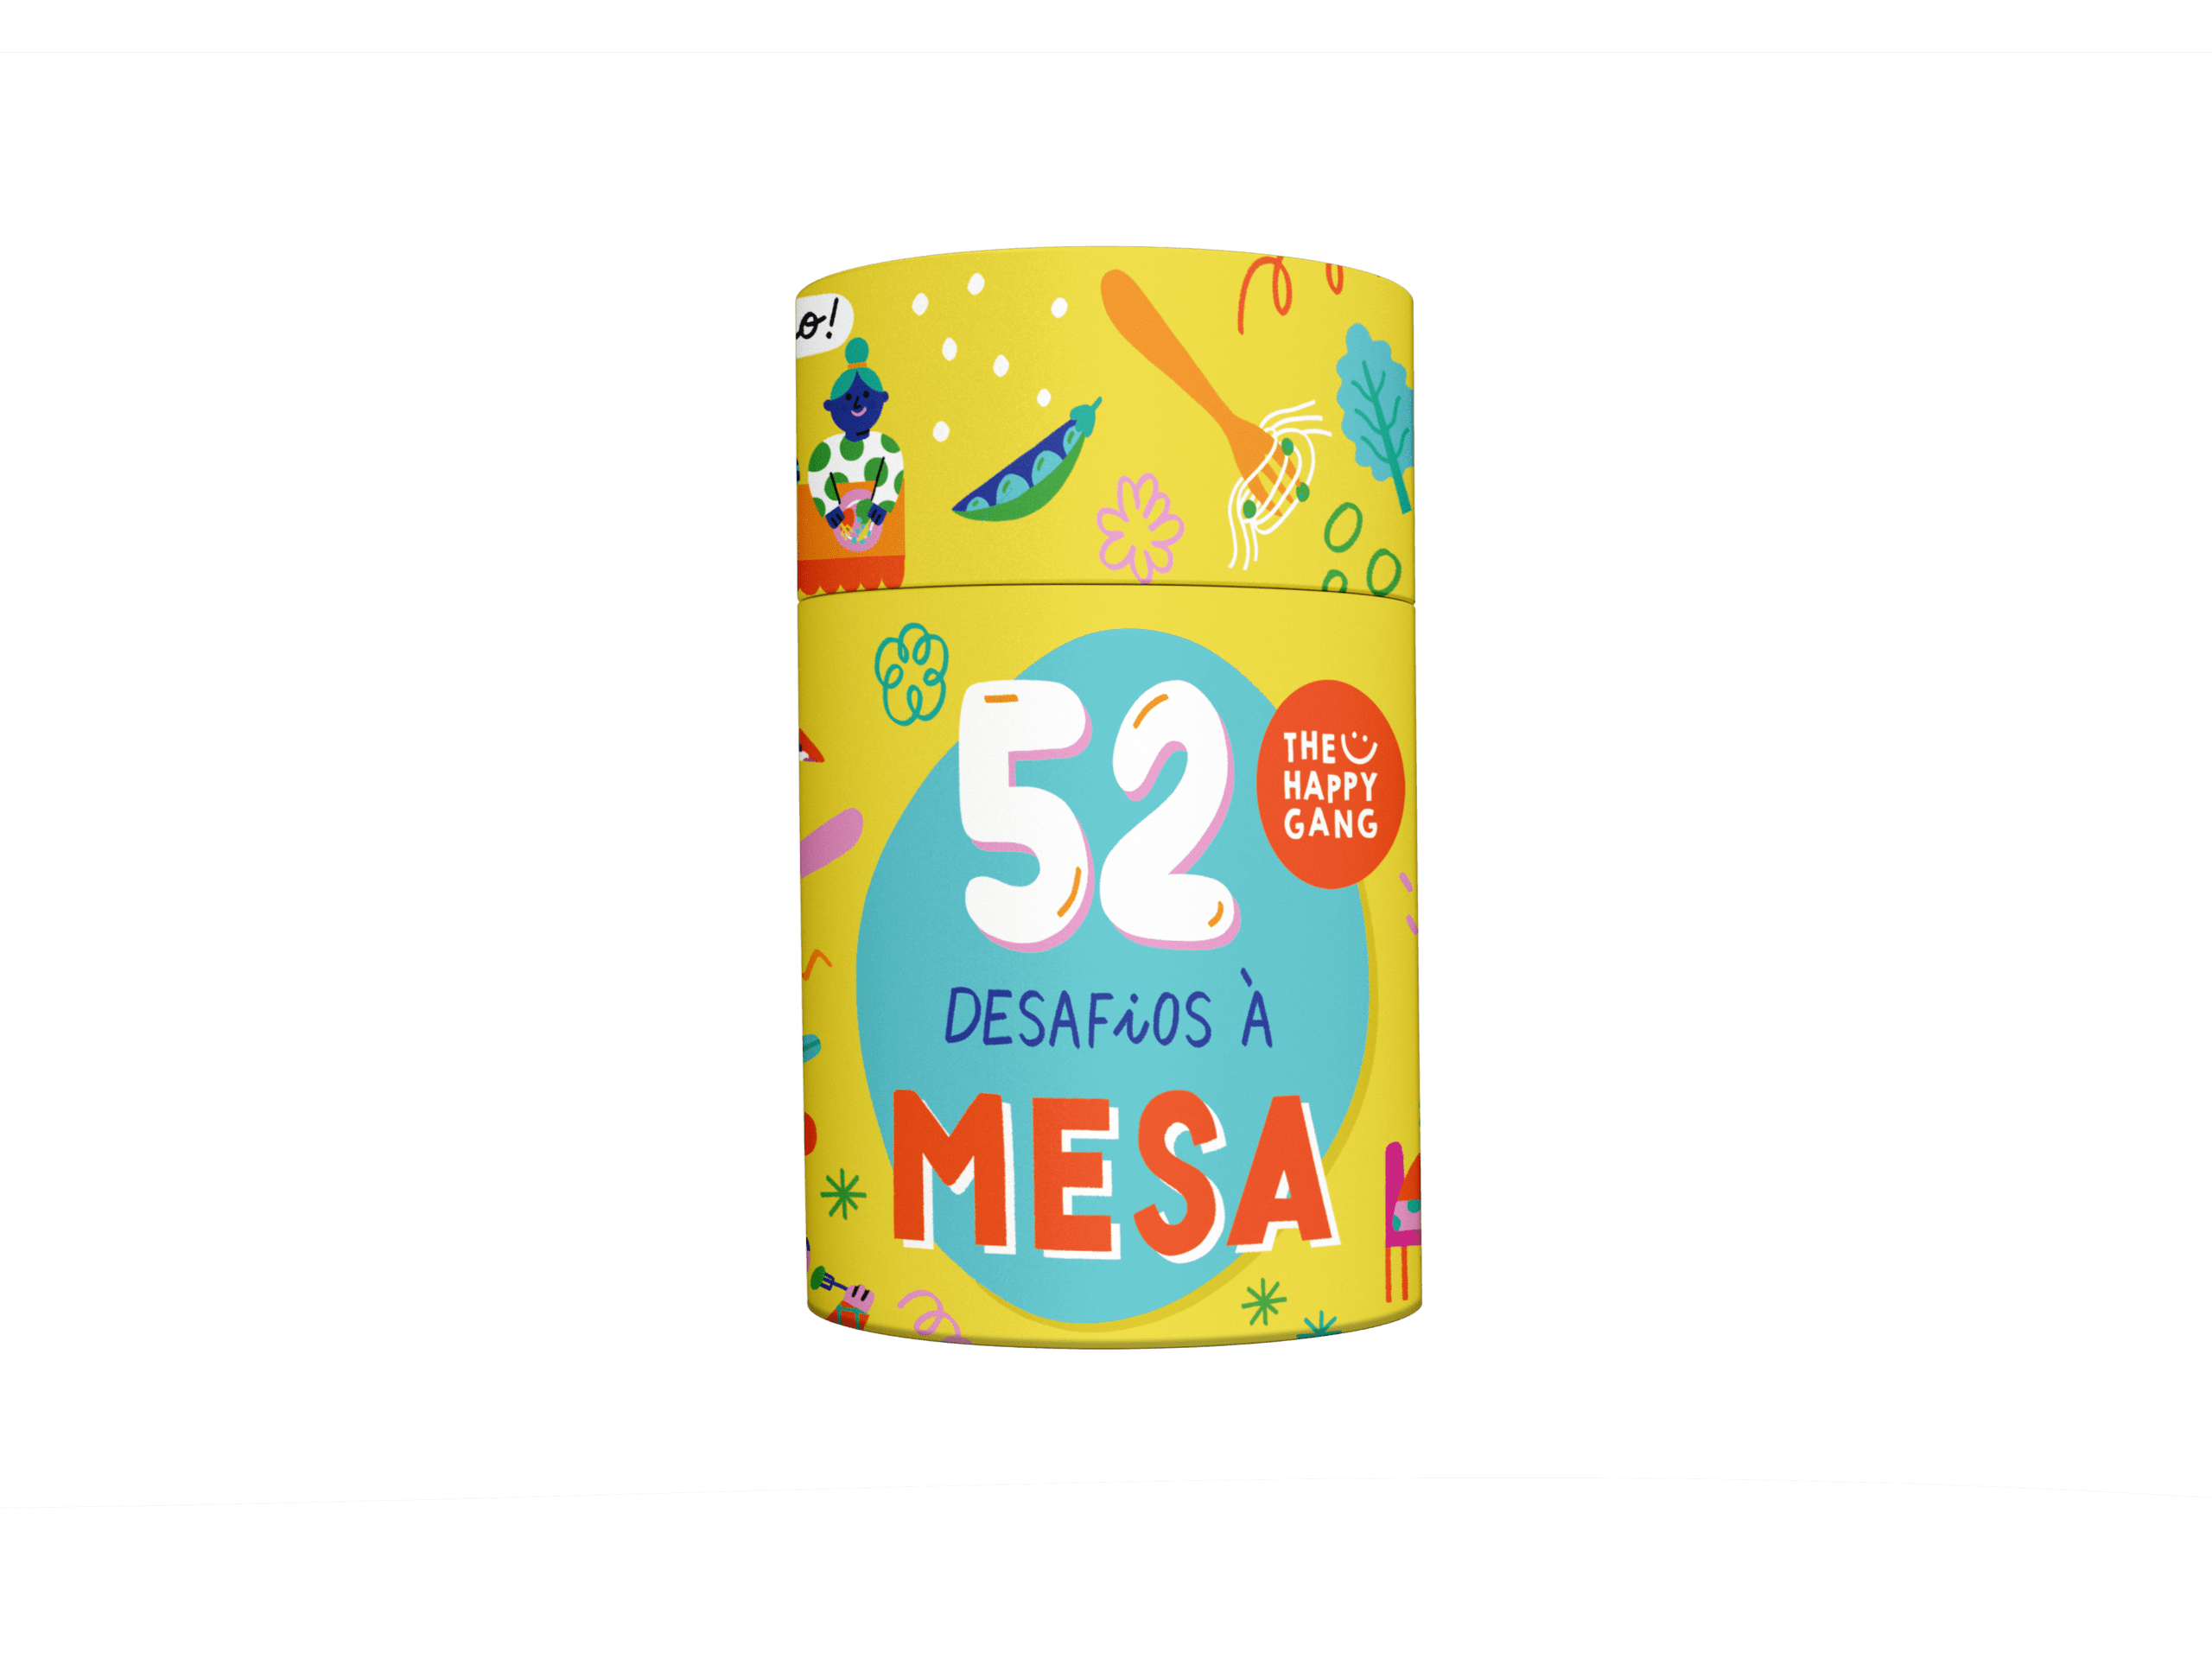 52 Desafios à Mesa | The Happy Gang Mini-Me - Baby & Kids Store